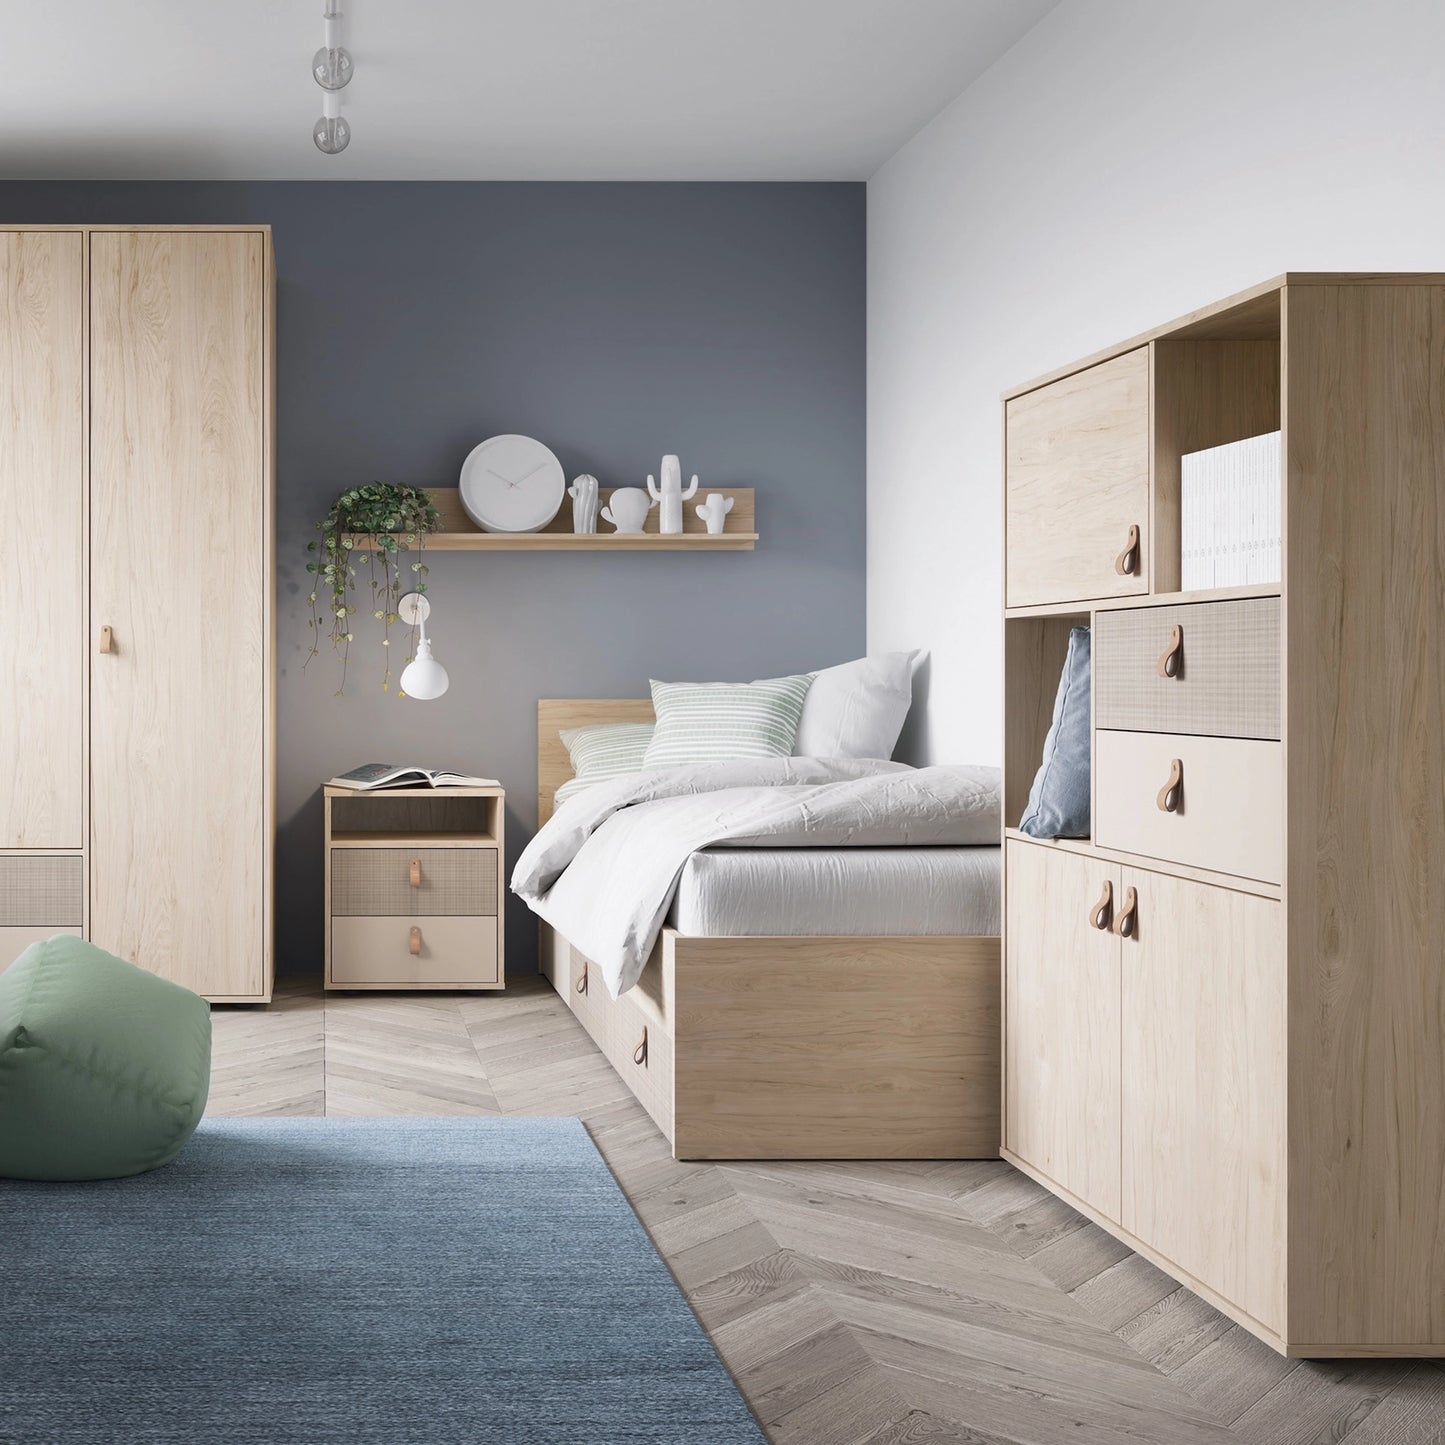 Furniture To Go Denim 2 Drawer Bedside Cabinet in Light Walnut, Grey Fabric Effect & Cashmere